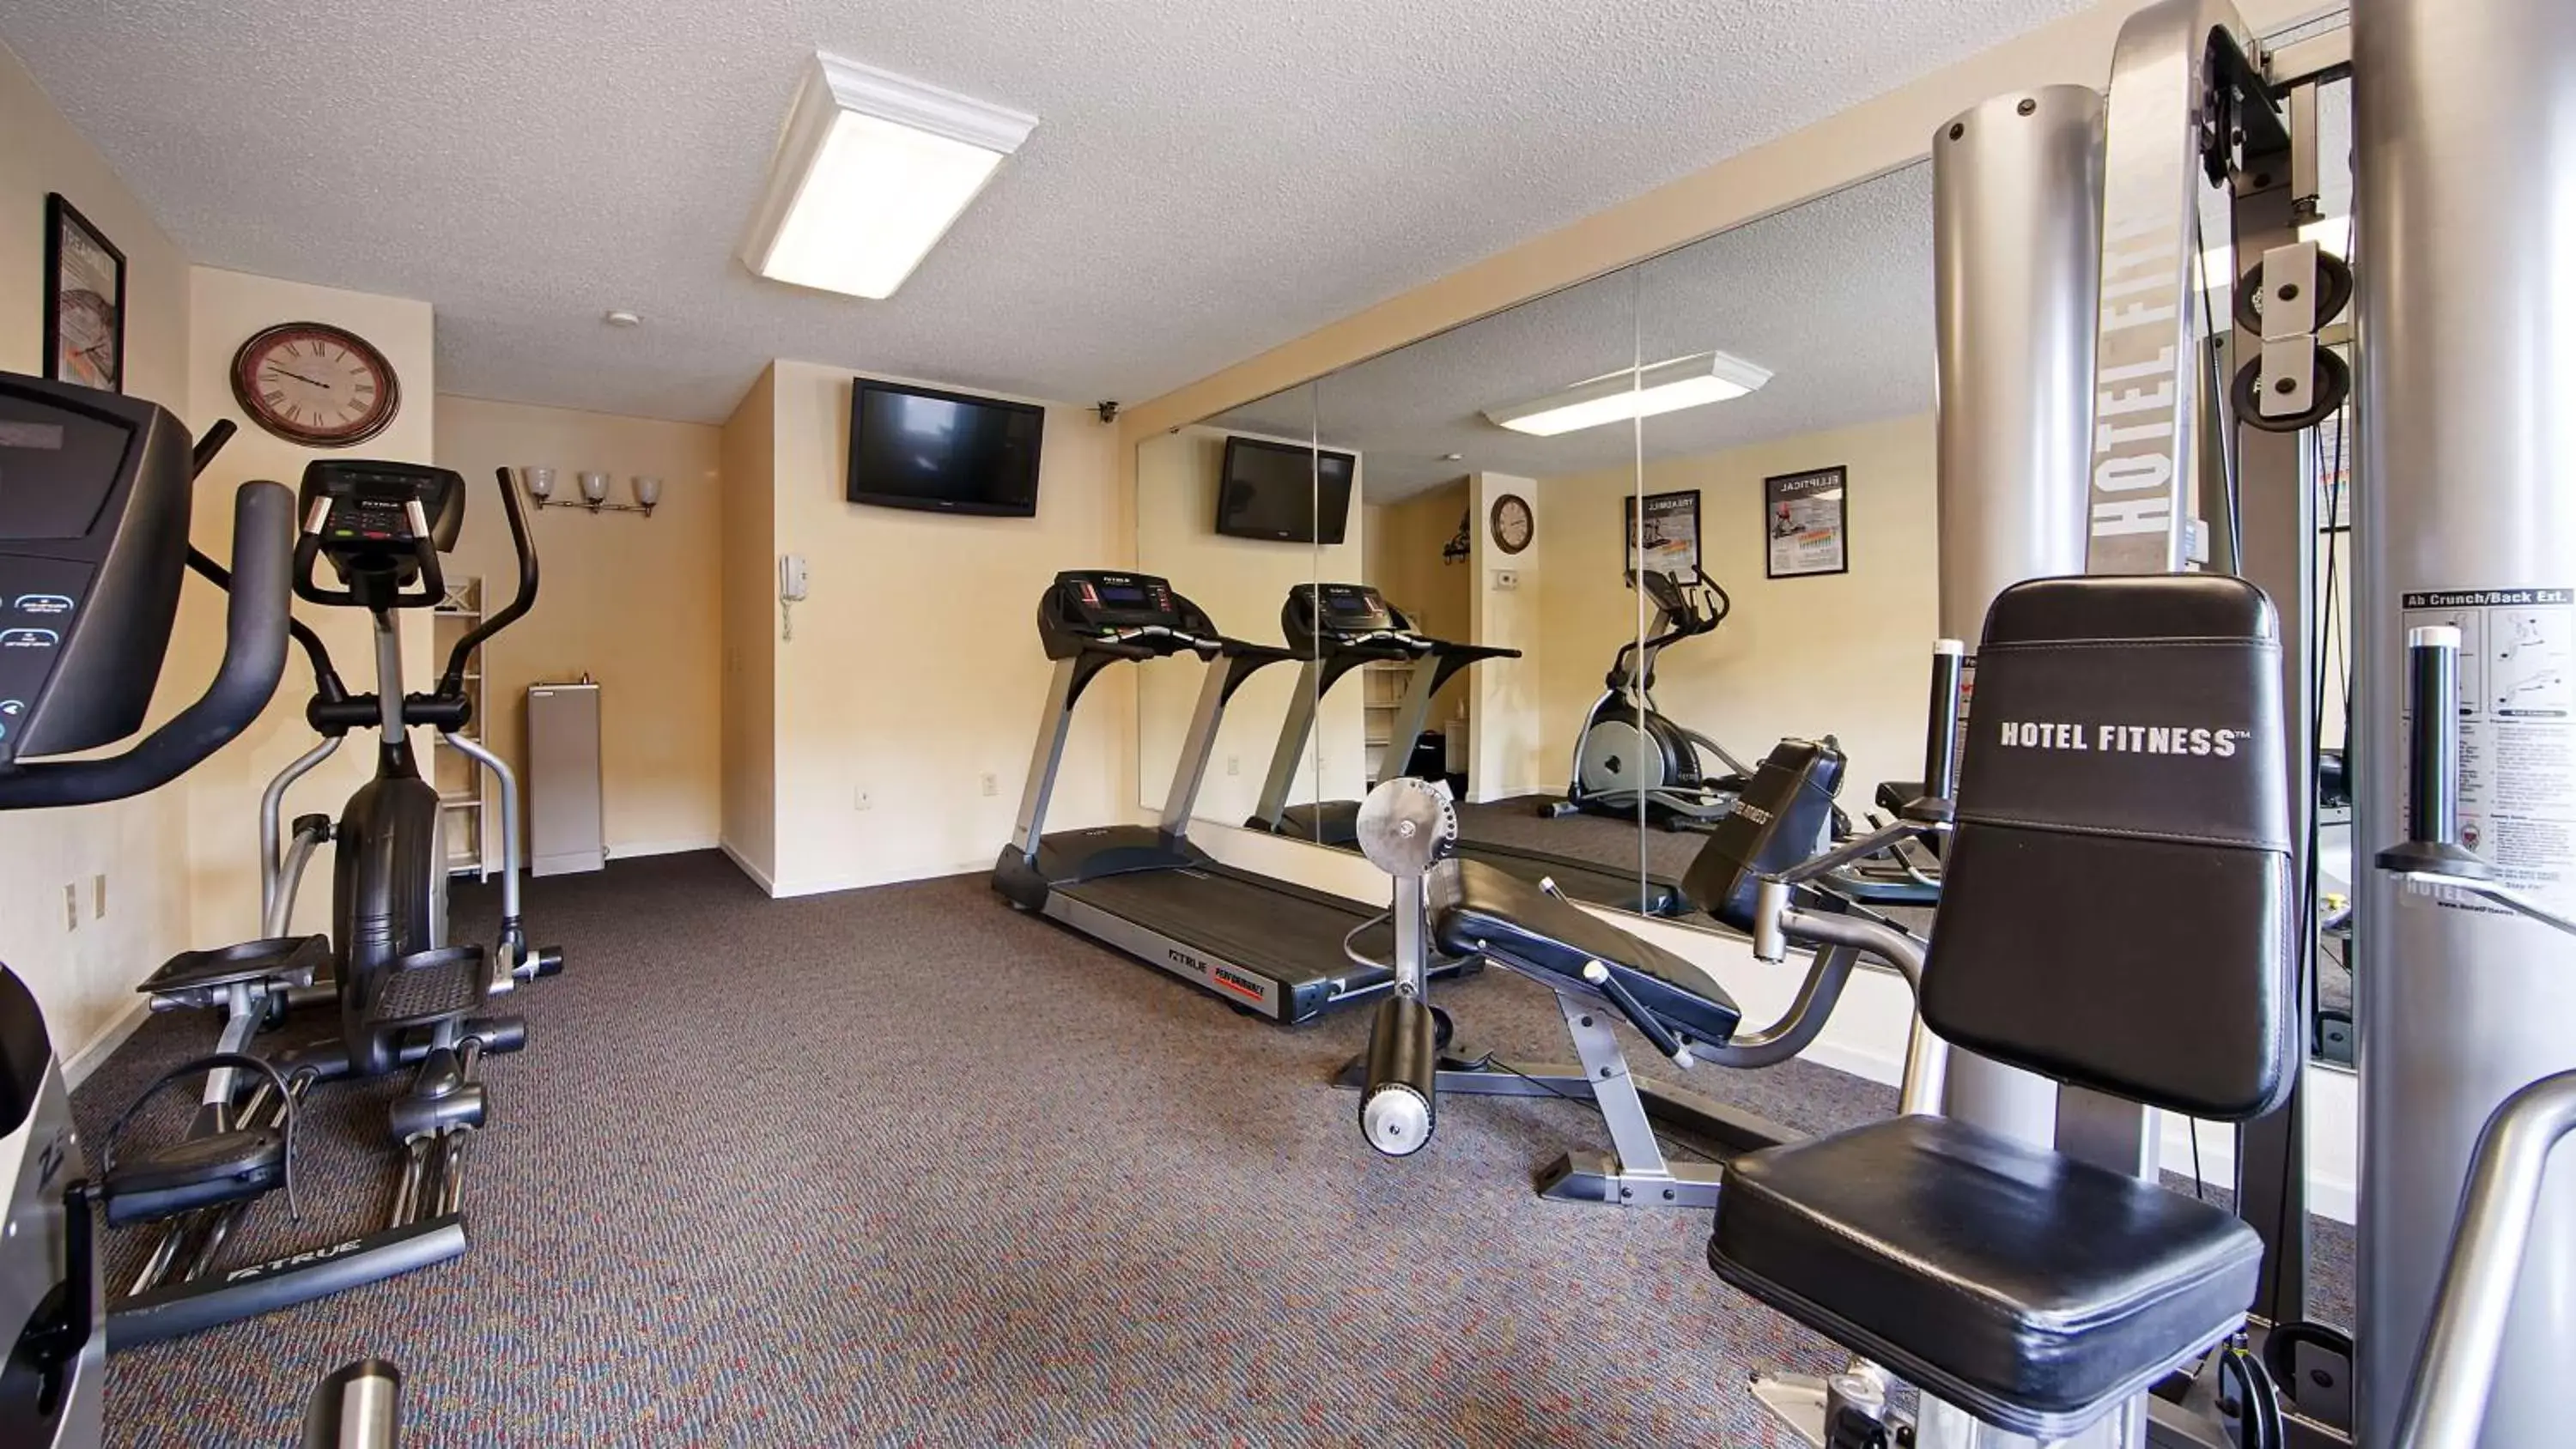 Fitness centre/facilities, Fitness Center/Facilities in Best Western PLUS Santee Inn